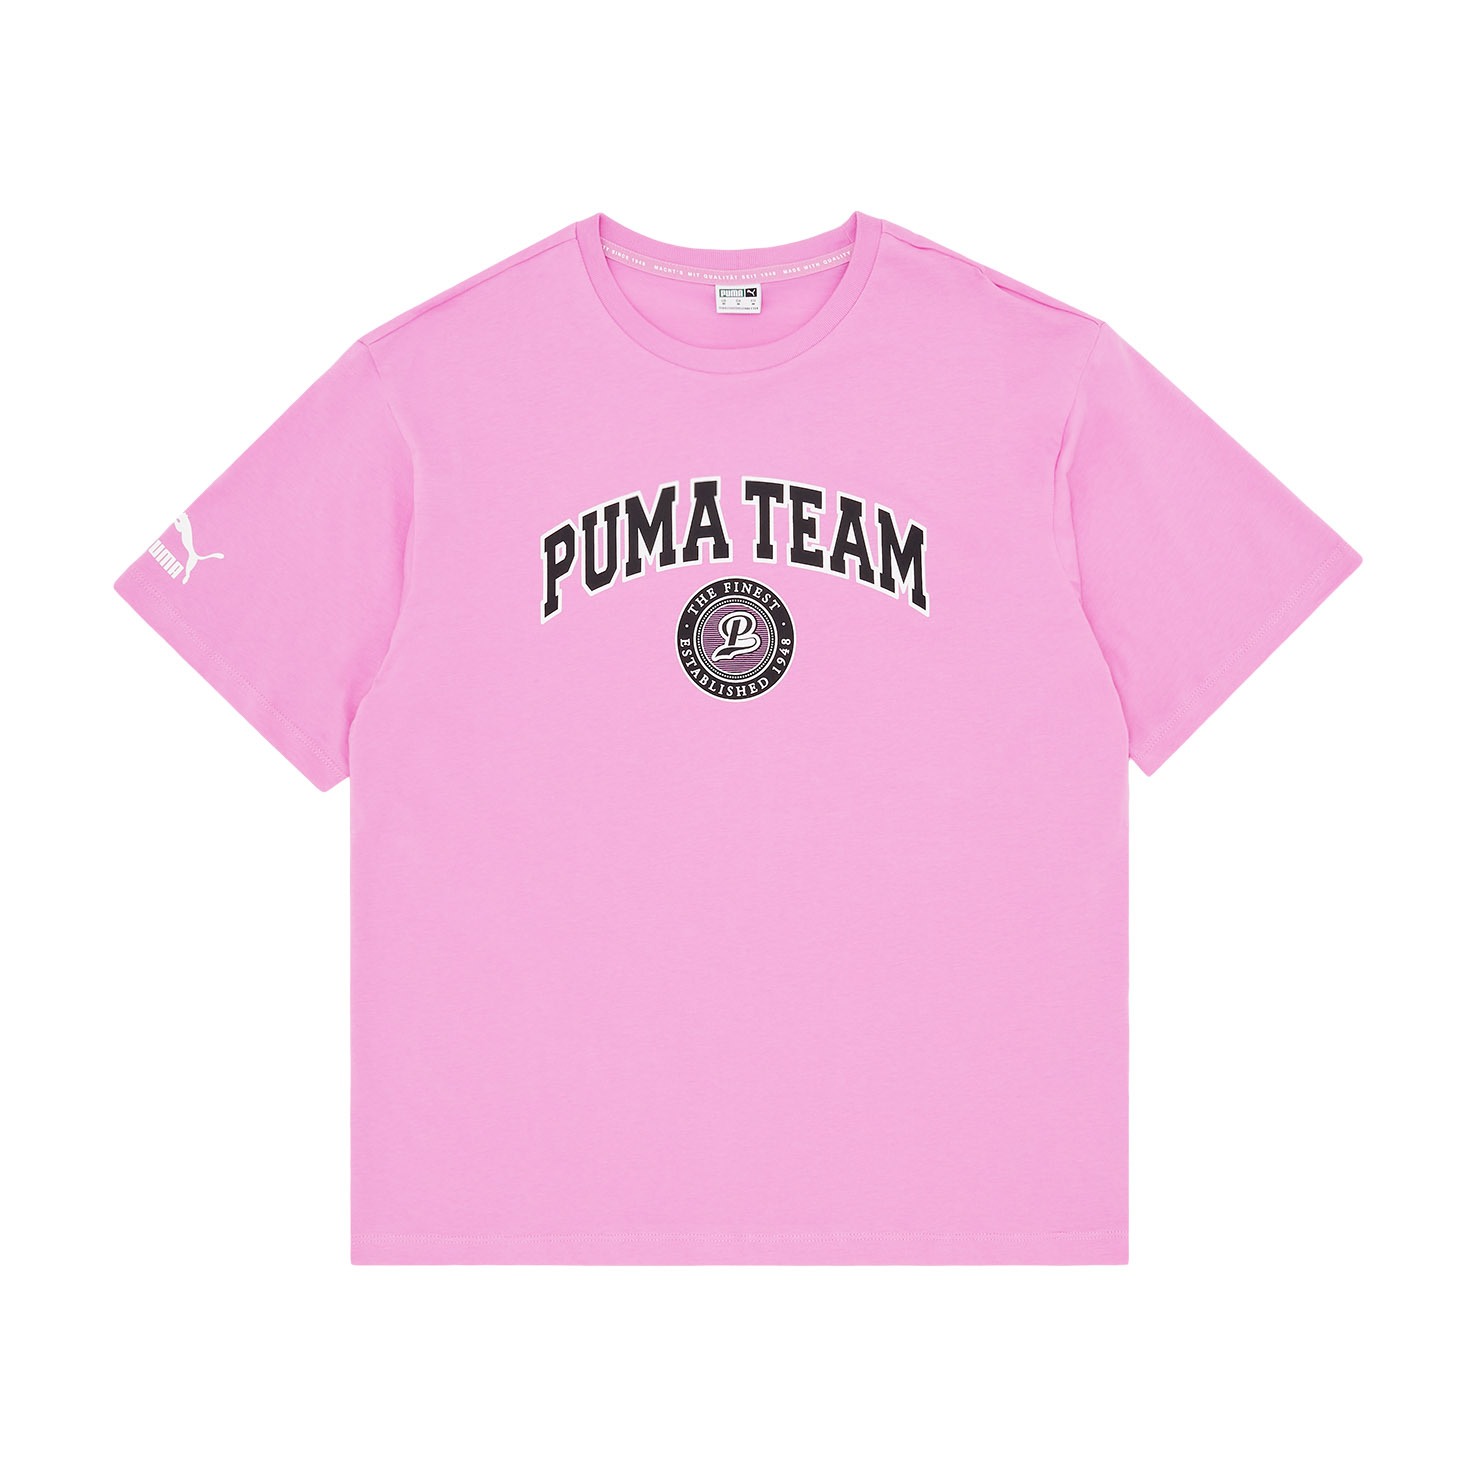 Puma Team Graphic Tee